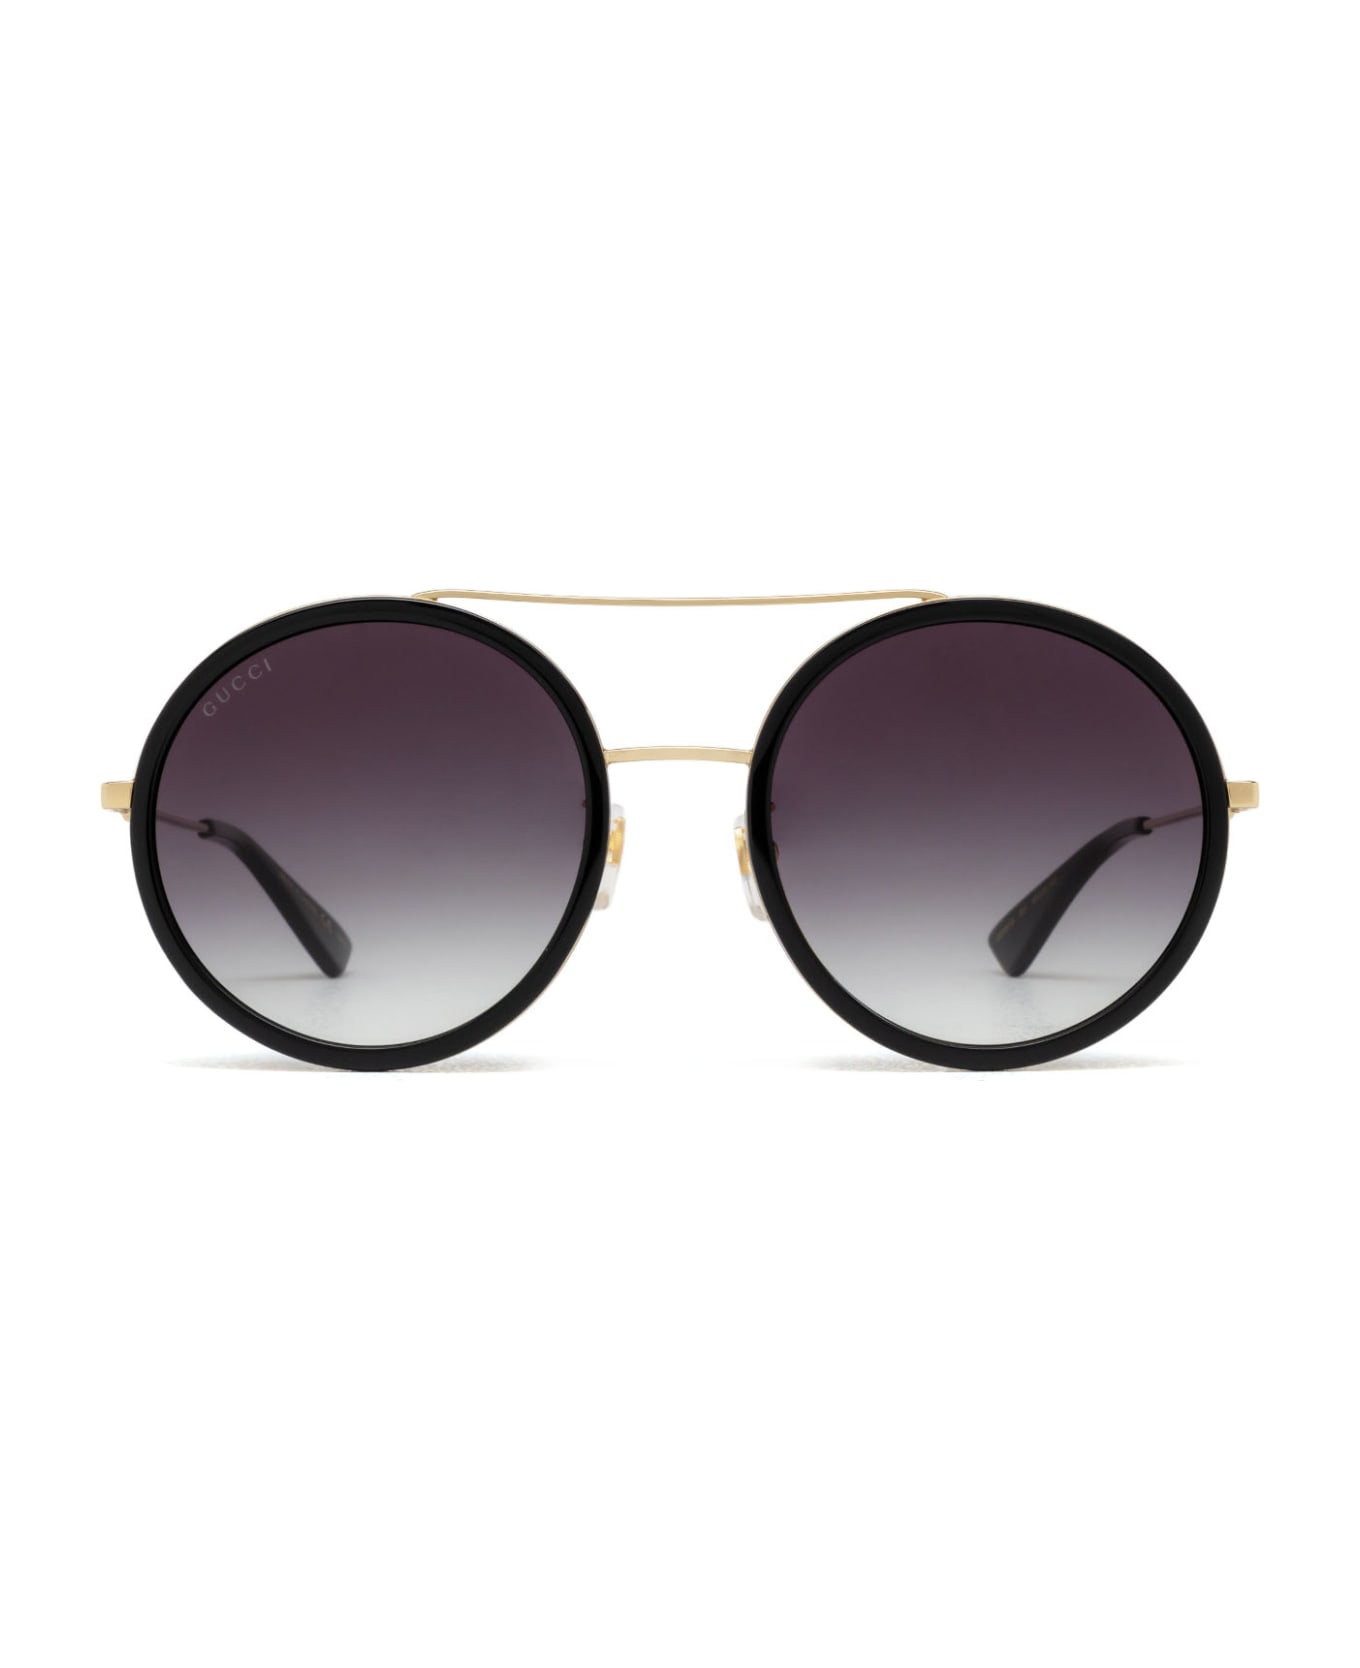 Gucci Eyewear Gg0061s Black Sunglasses - Black